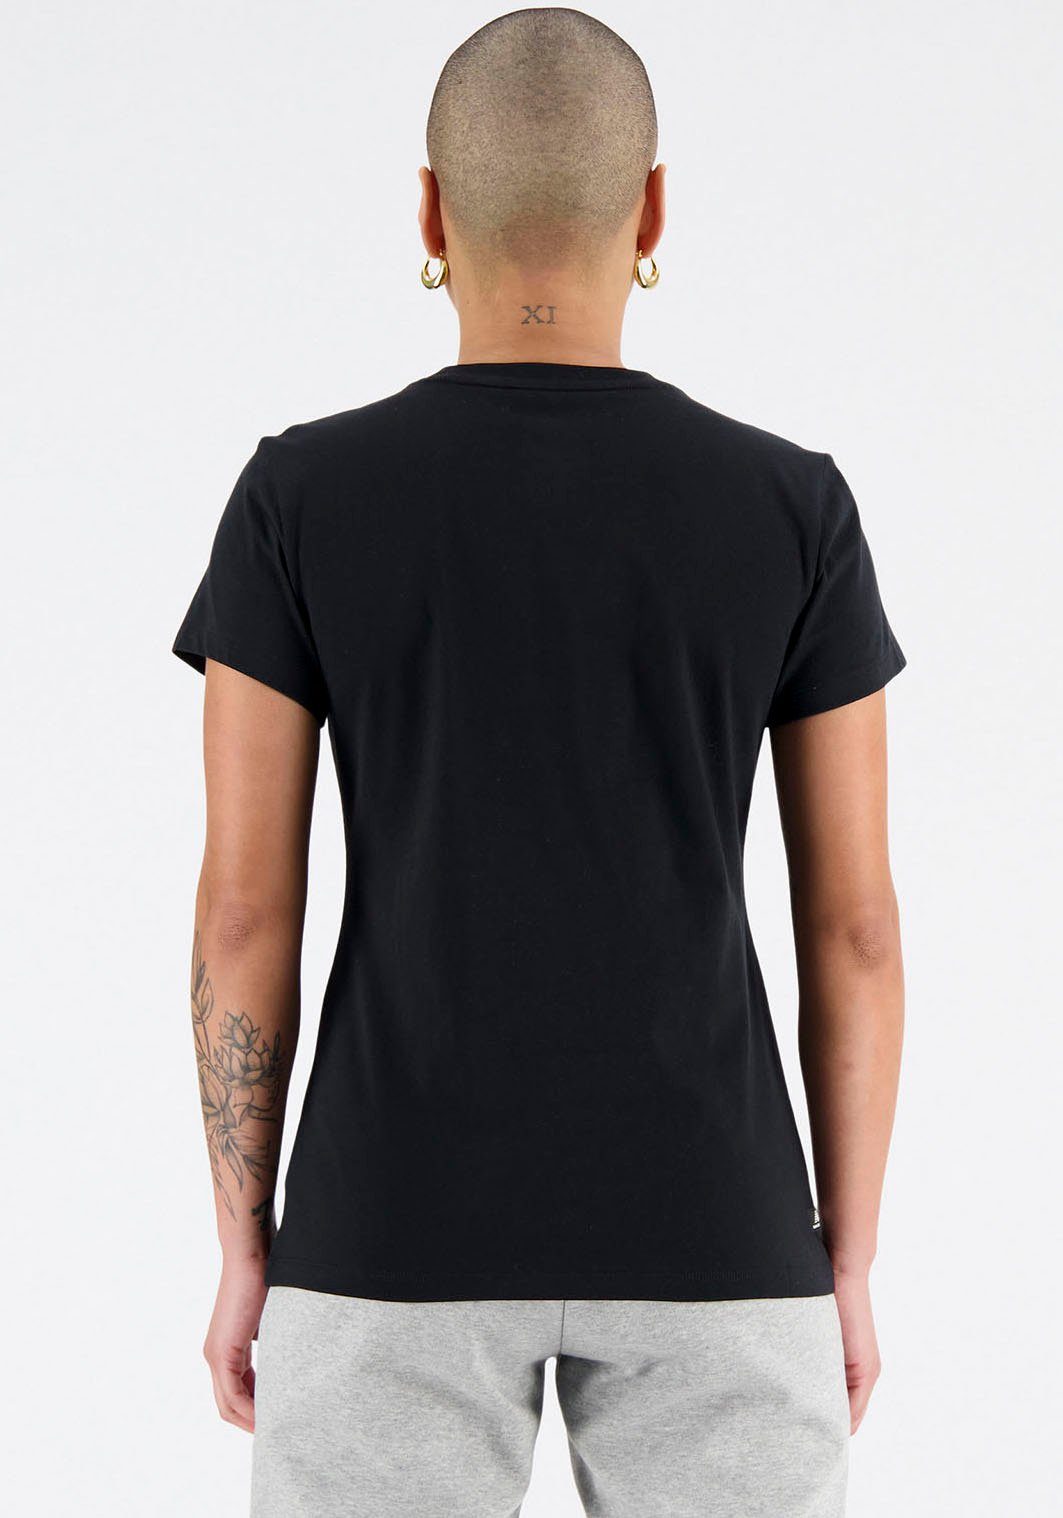 New Balance T-Shirt black 001